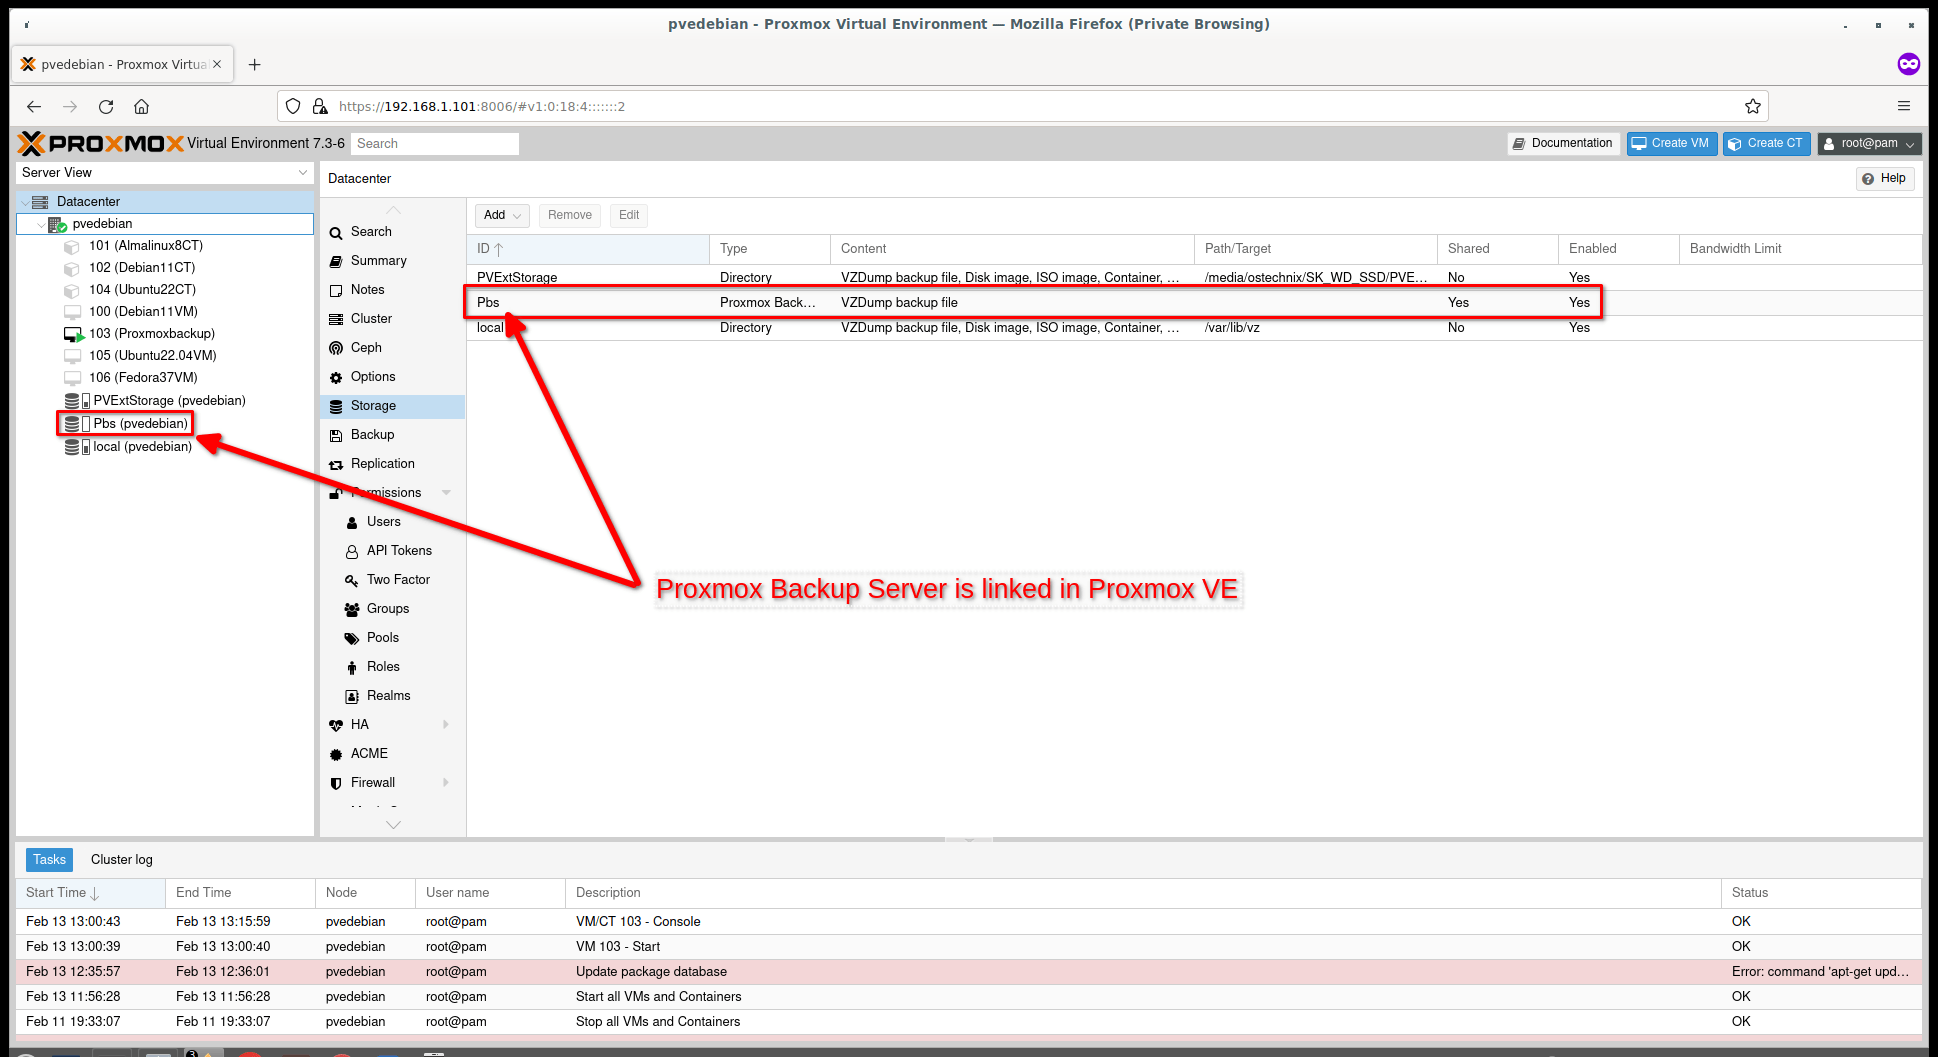 Proxmox-Backup-Server-is-added-in-Proxmox-VE